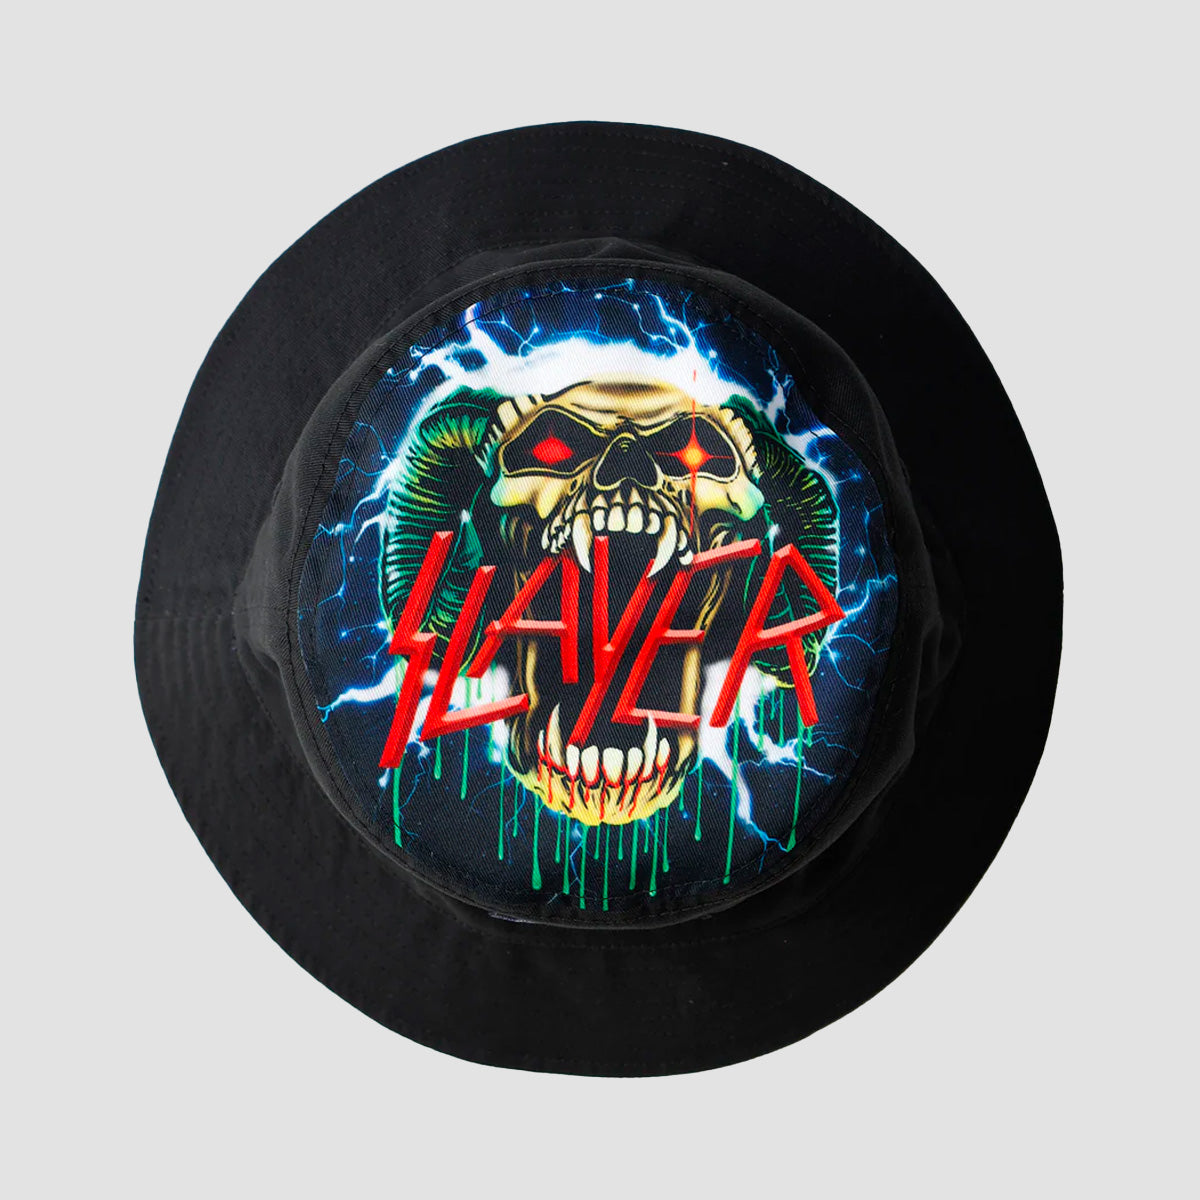 DC X Slayer Reversible Bucket Hat Black